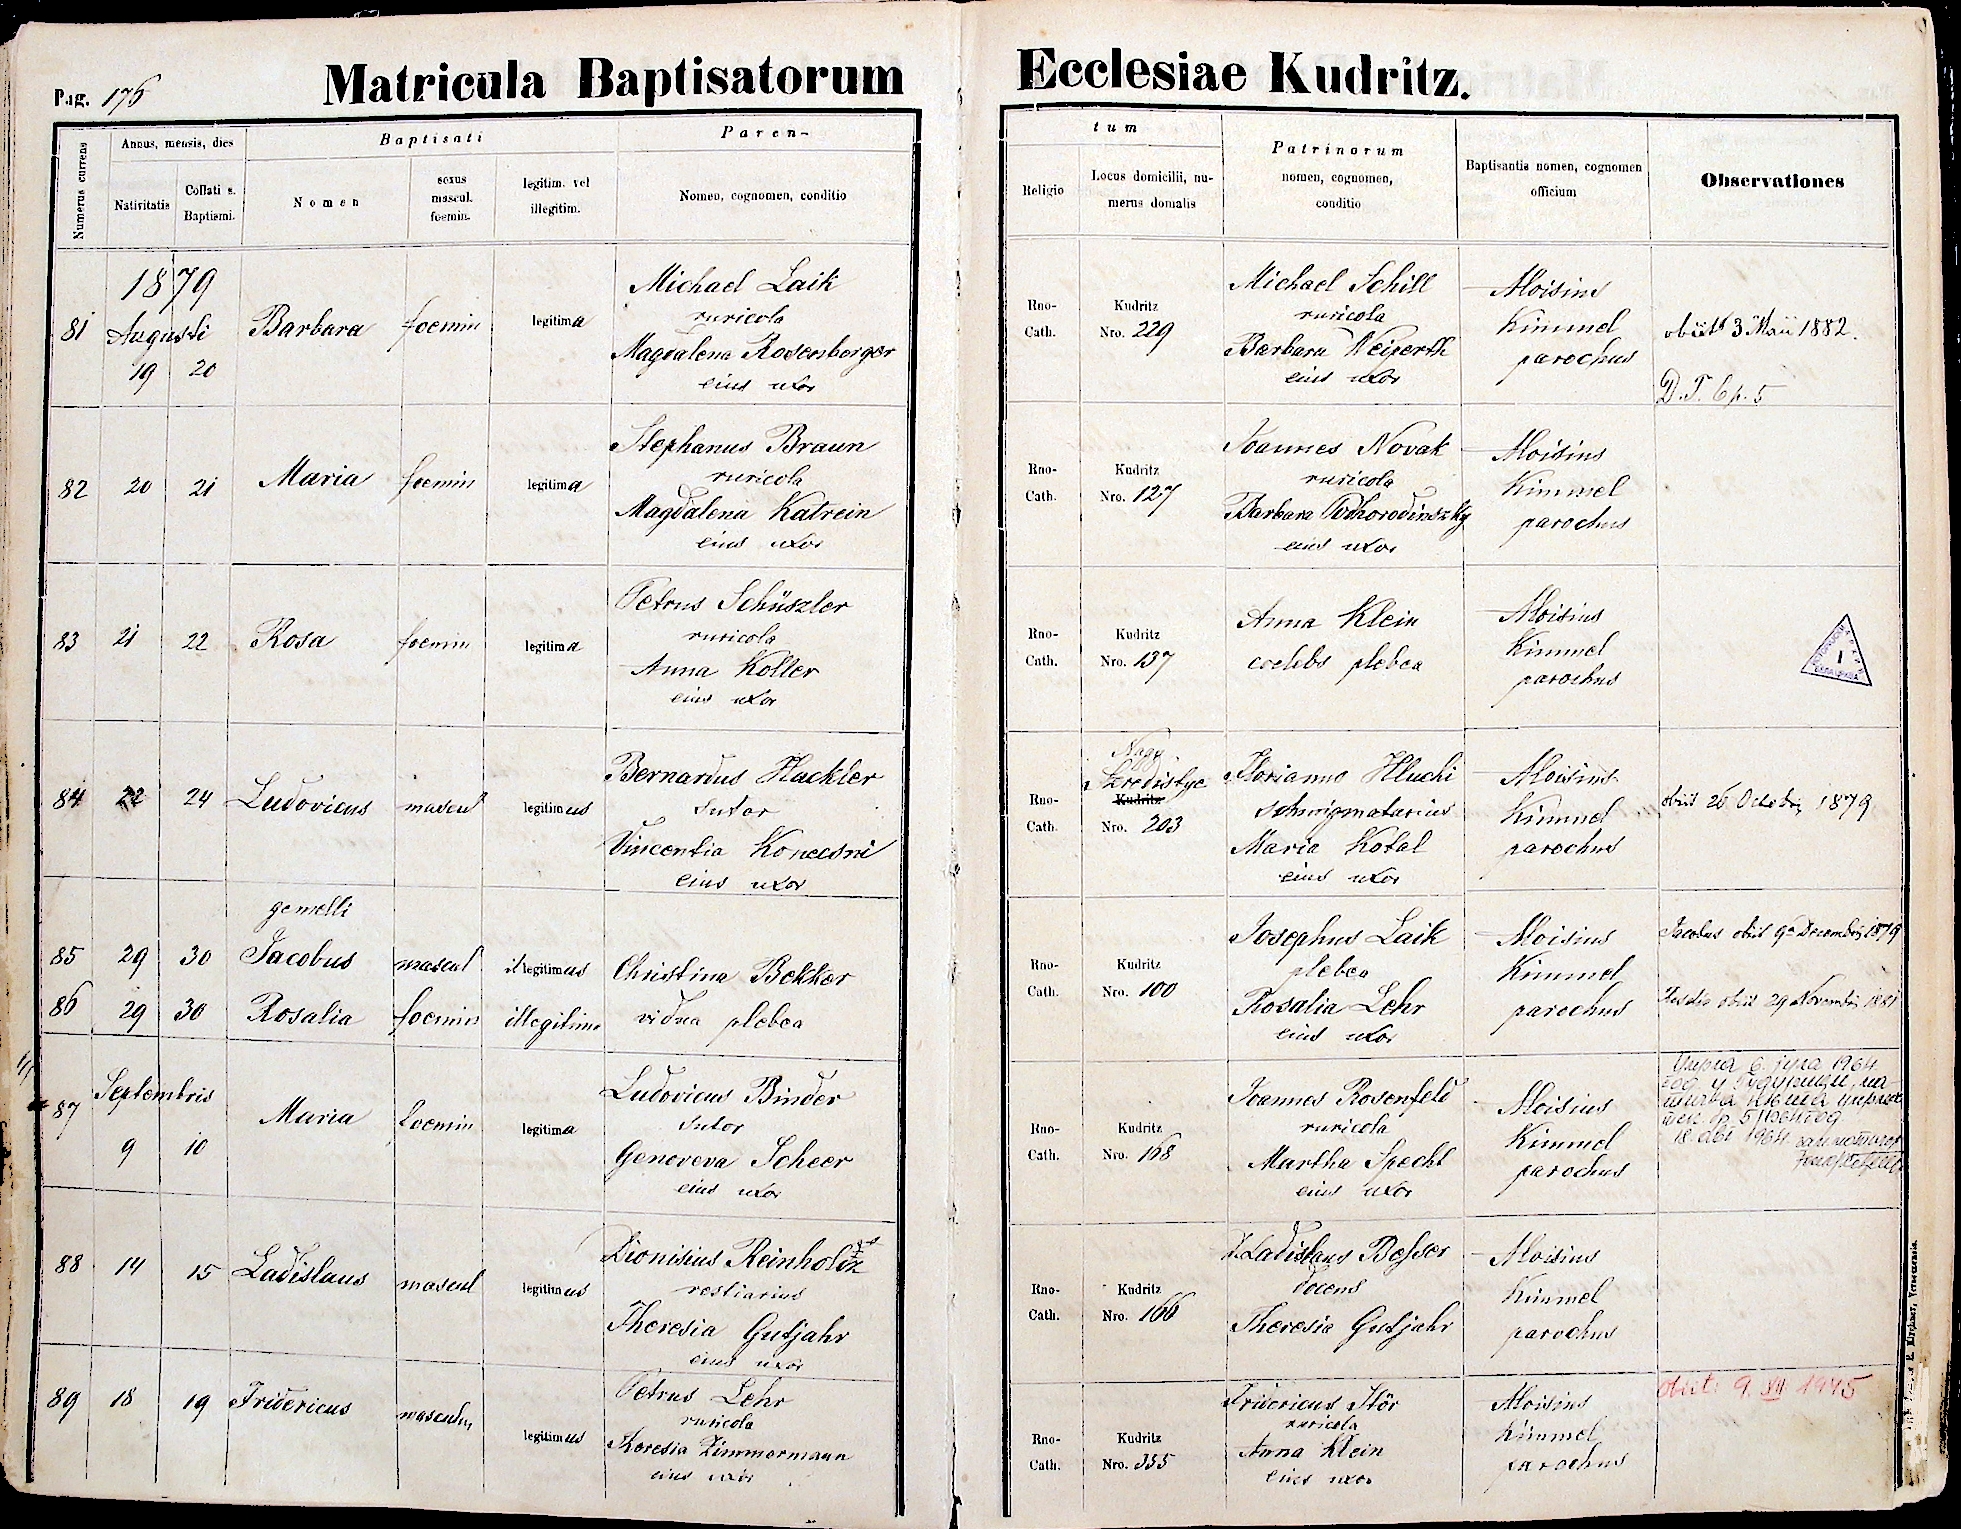 images/church_records/BIRTHS/1870-1879B/1879/176